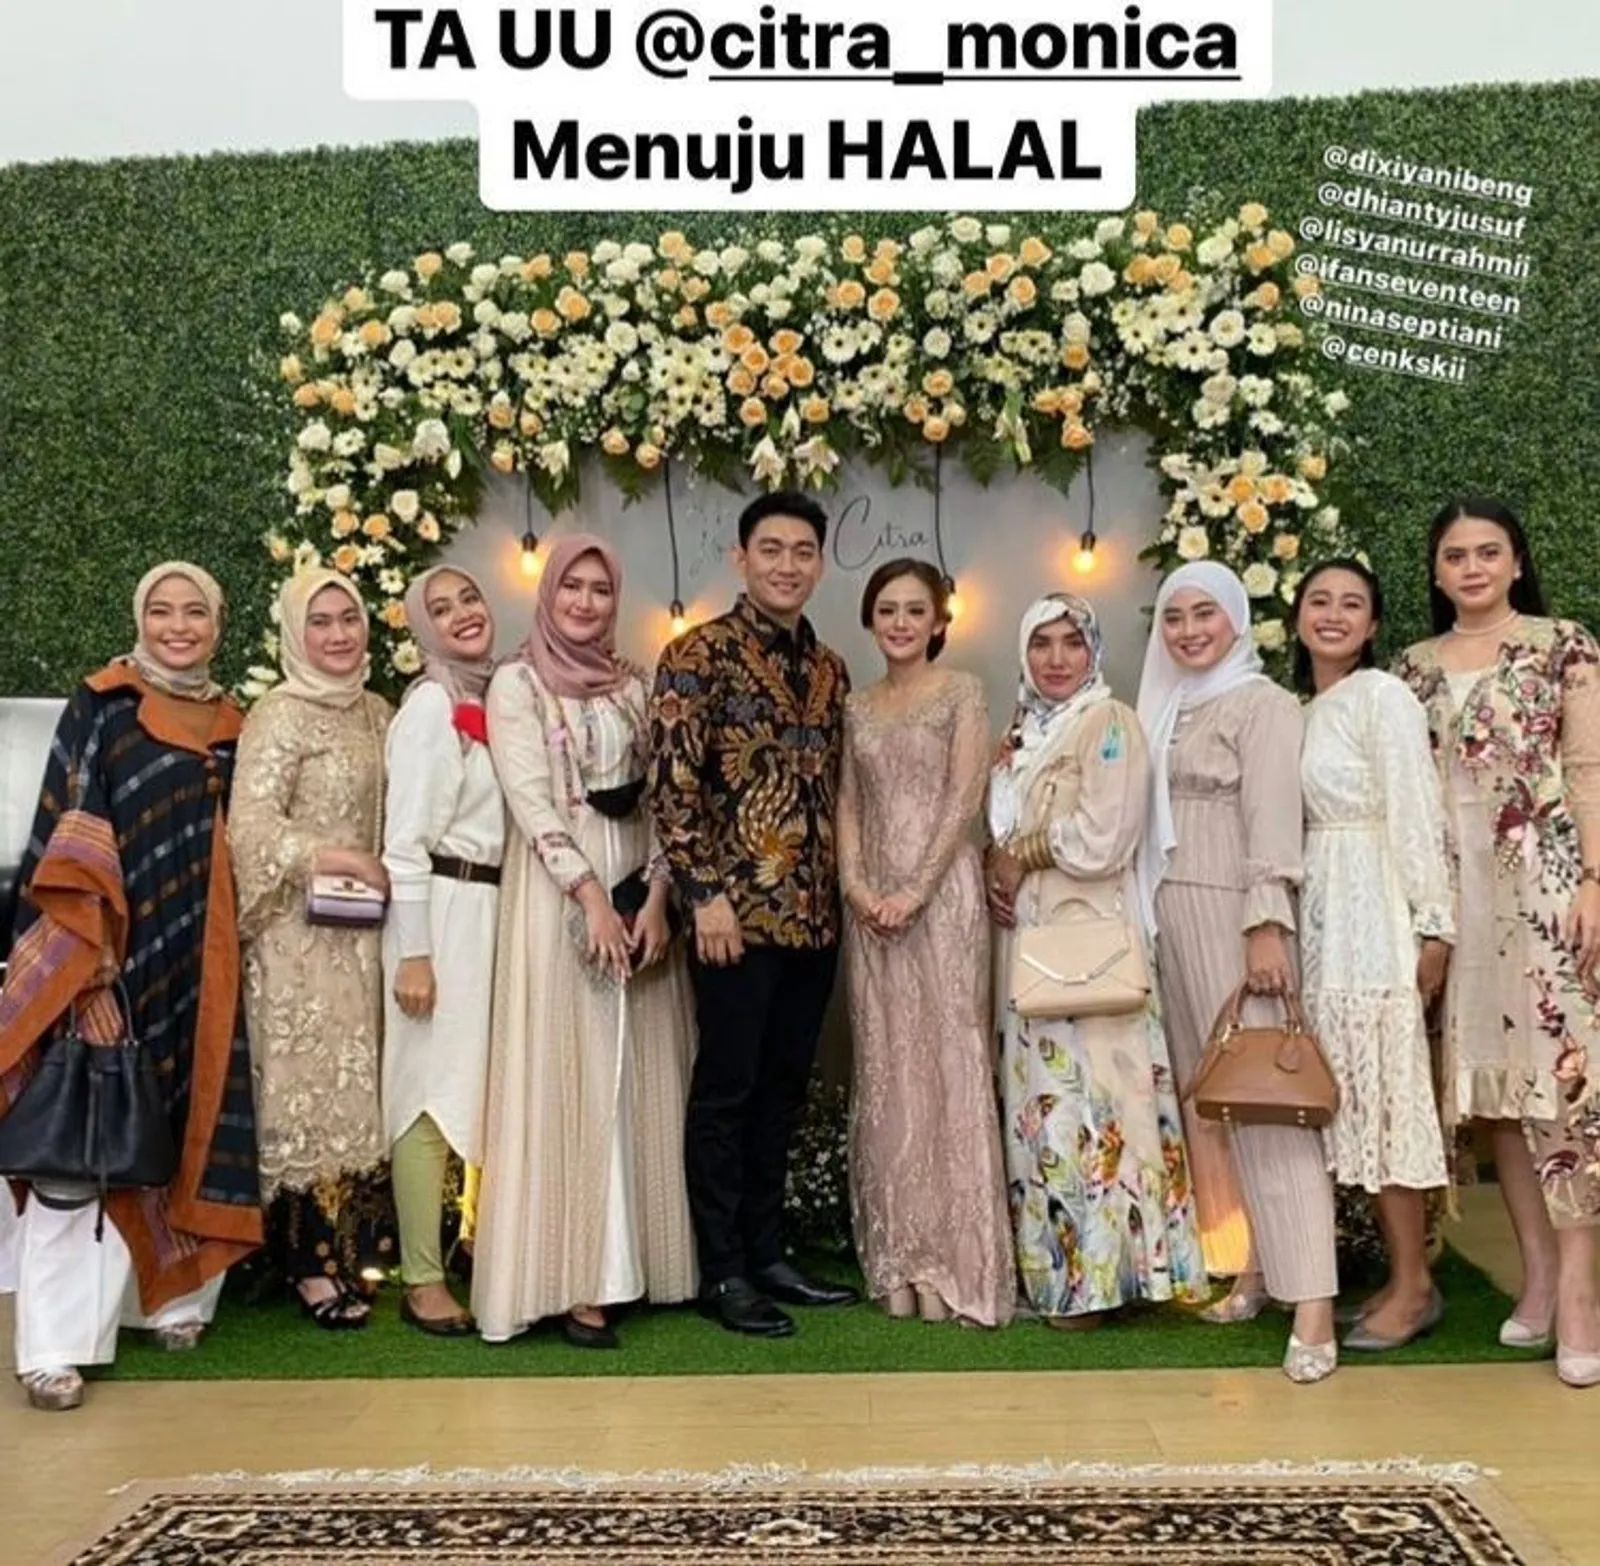 Segera Menikah, 9 Momen Manis Lamaran Ifan 'Seventeen' & Citra Monica